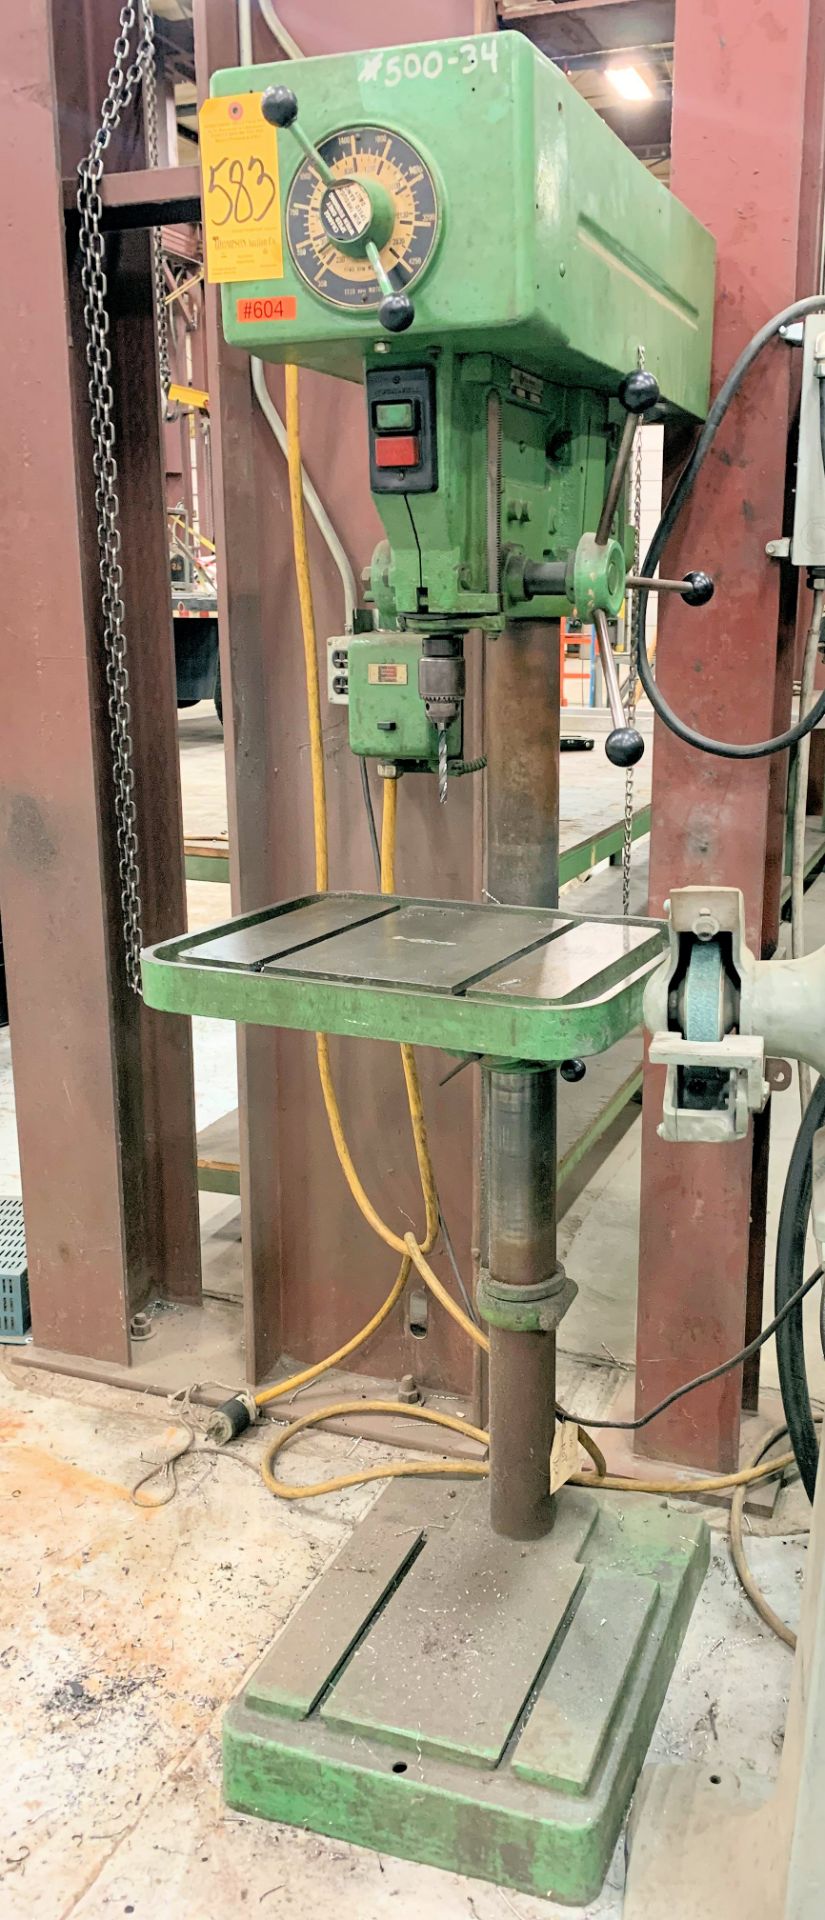 Rockwell Model 17-600, 17" Floor Standing Drill Press, S/n 1530175, 12 1/2" x 17" Work Table, 3-PH